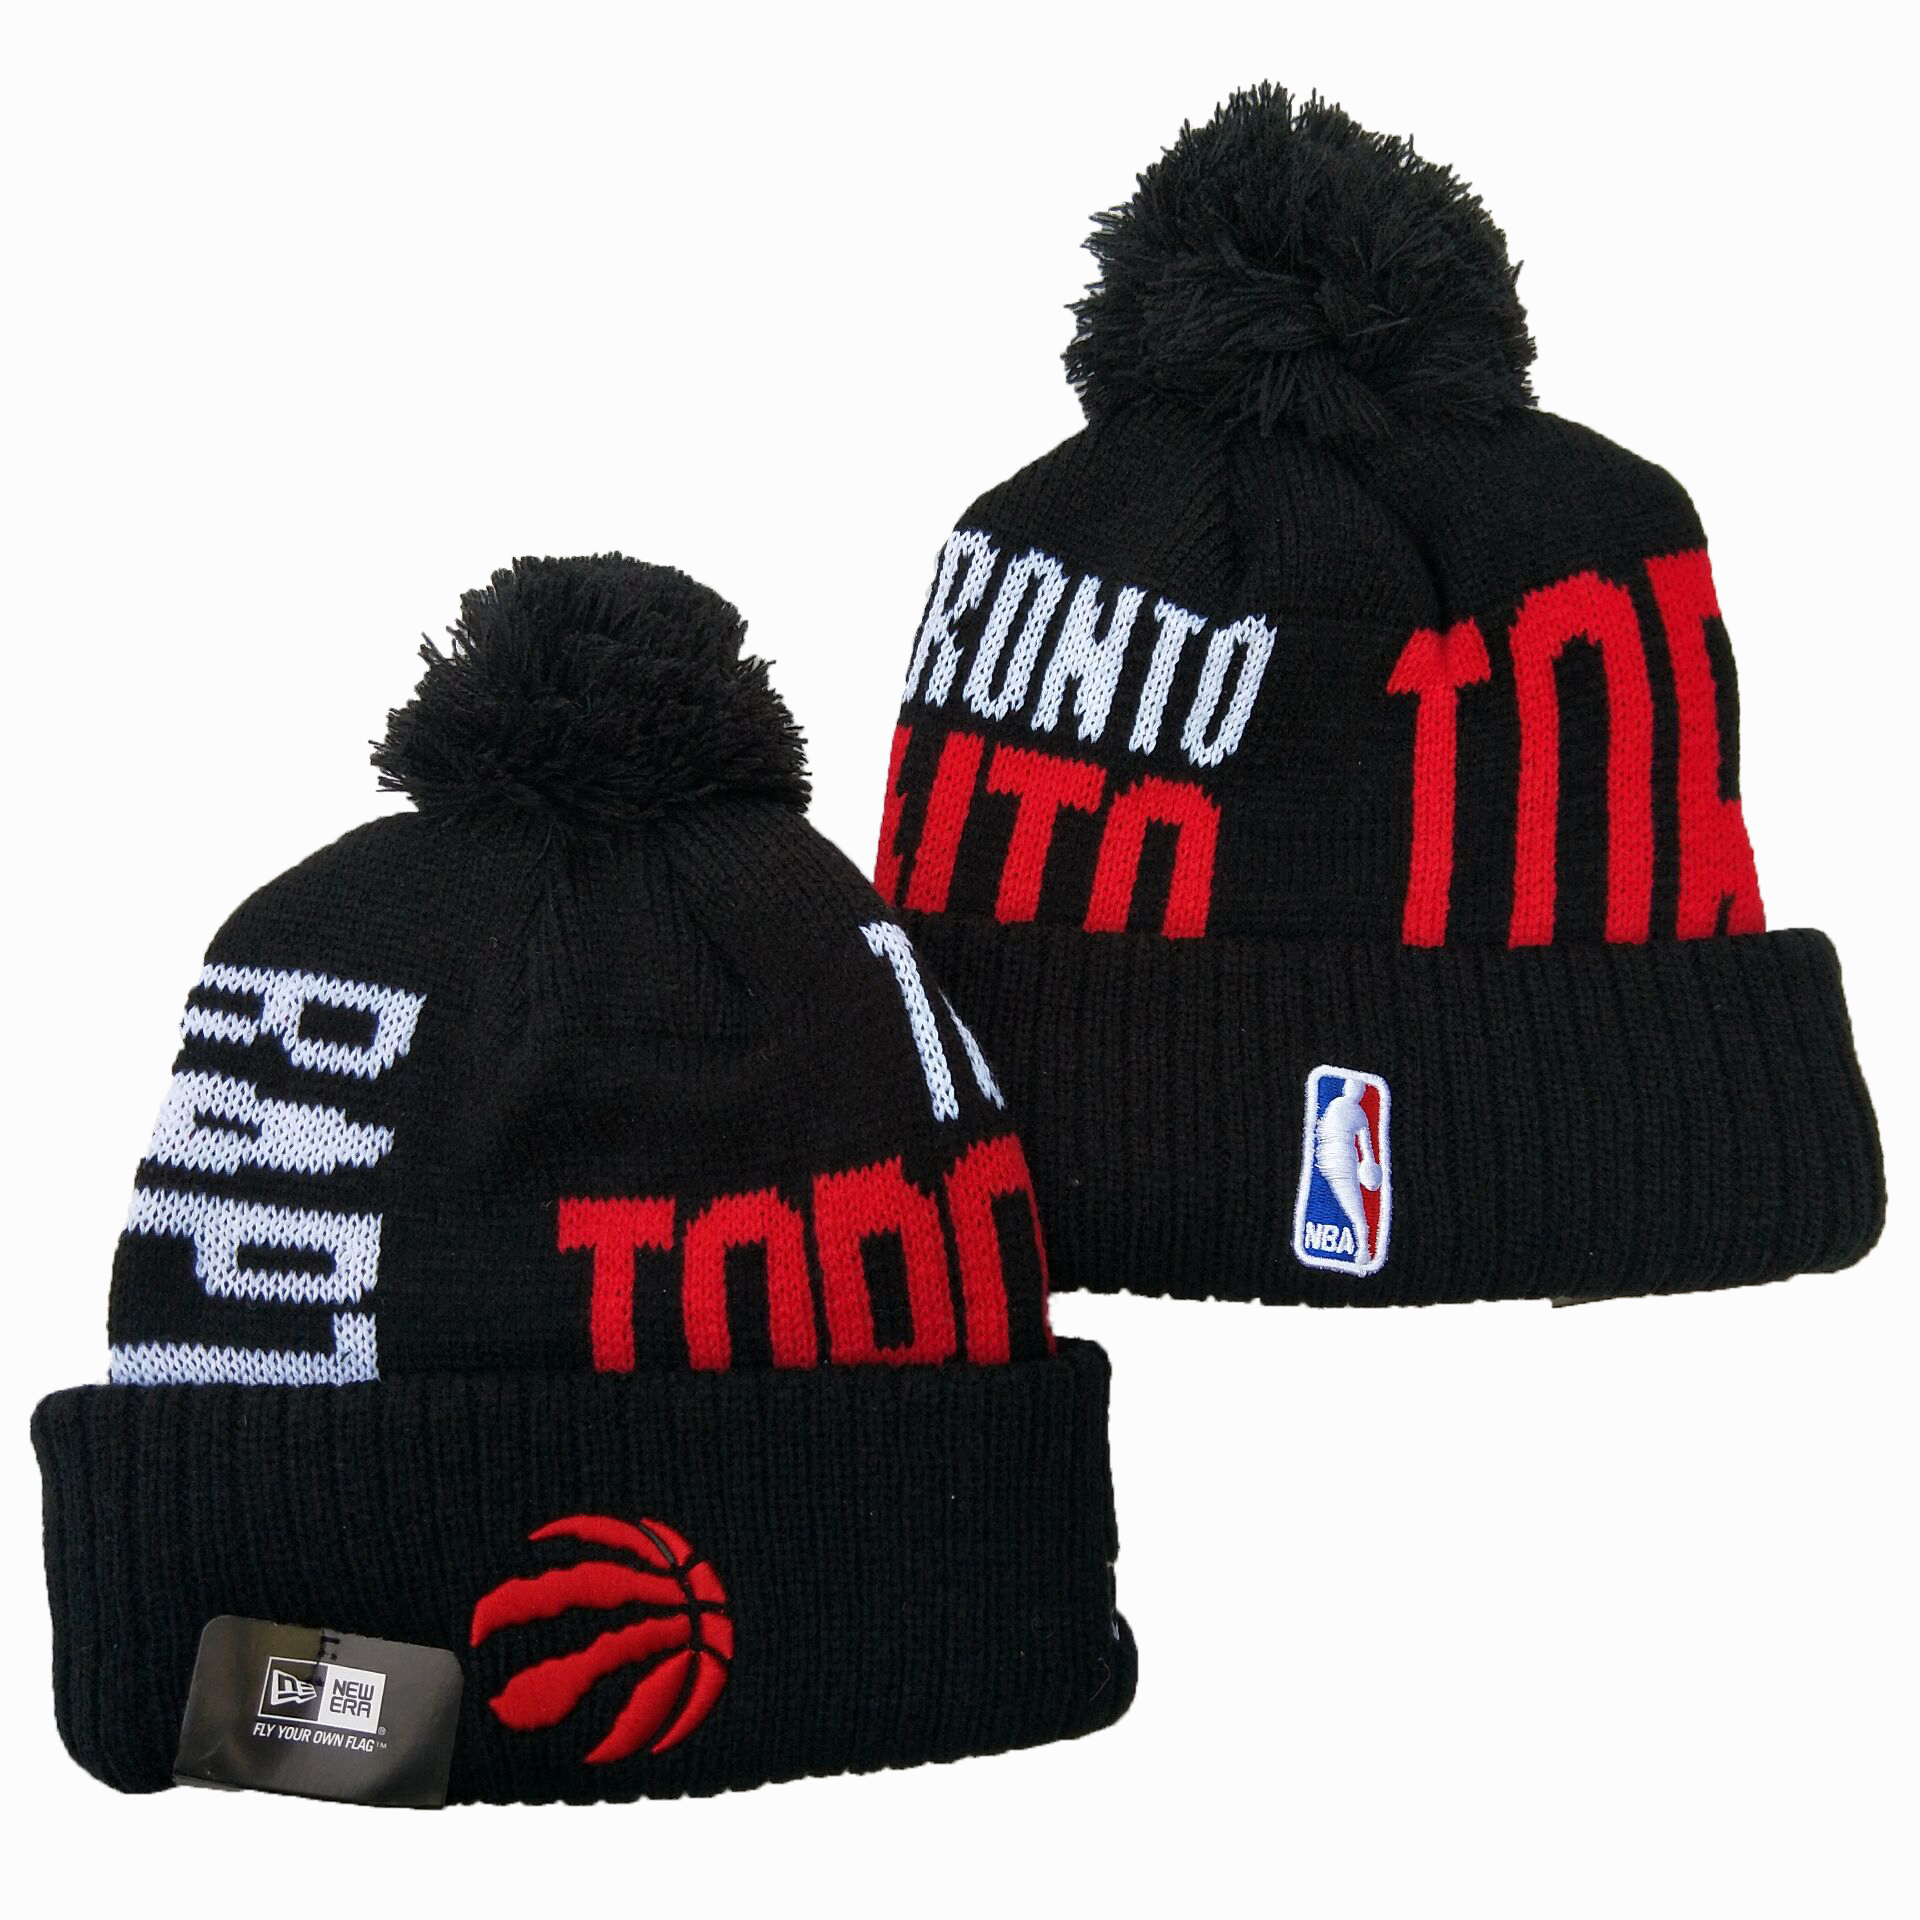 Toronto Raptors Knit Hats 001